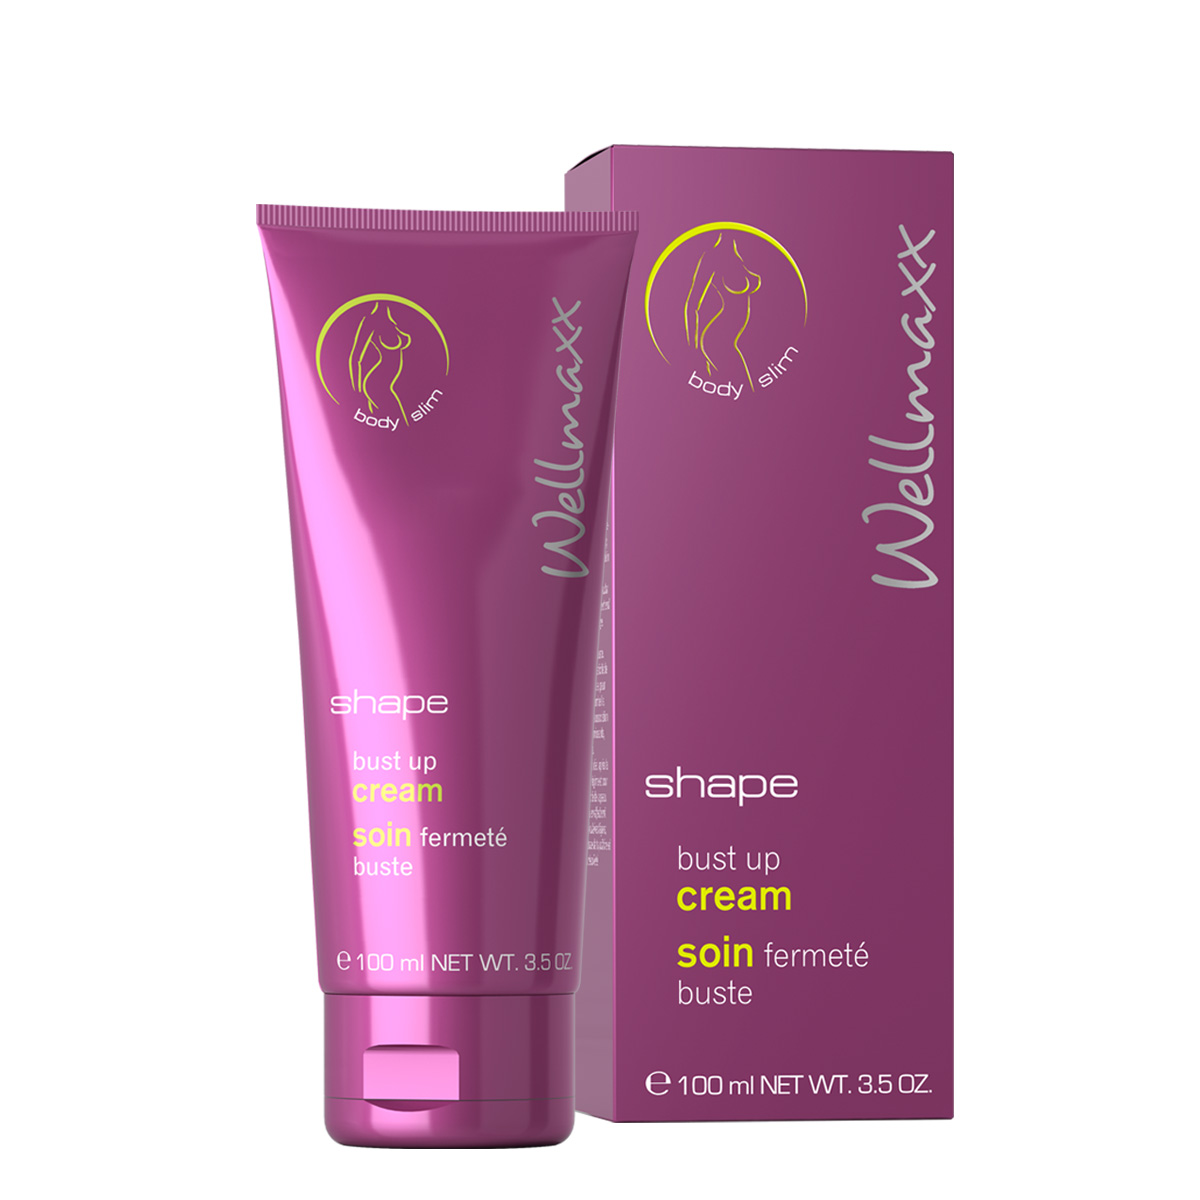 WELLMAXX - shape bust up cream - 1